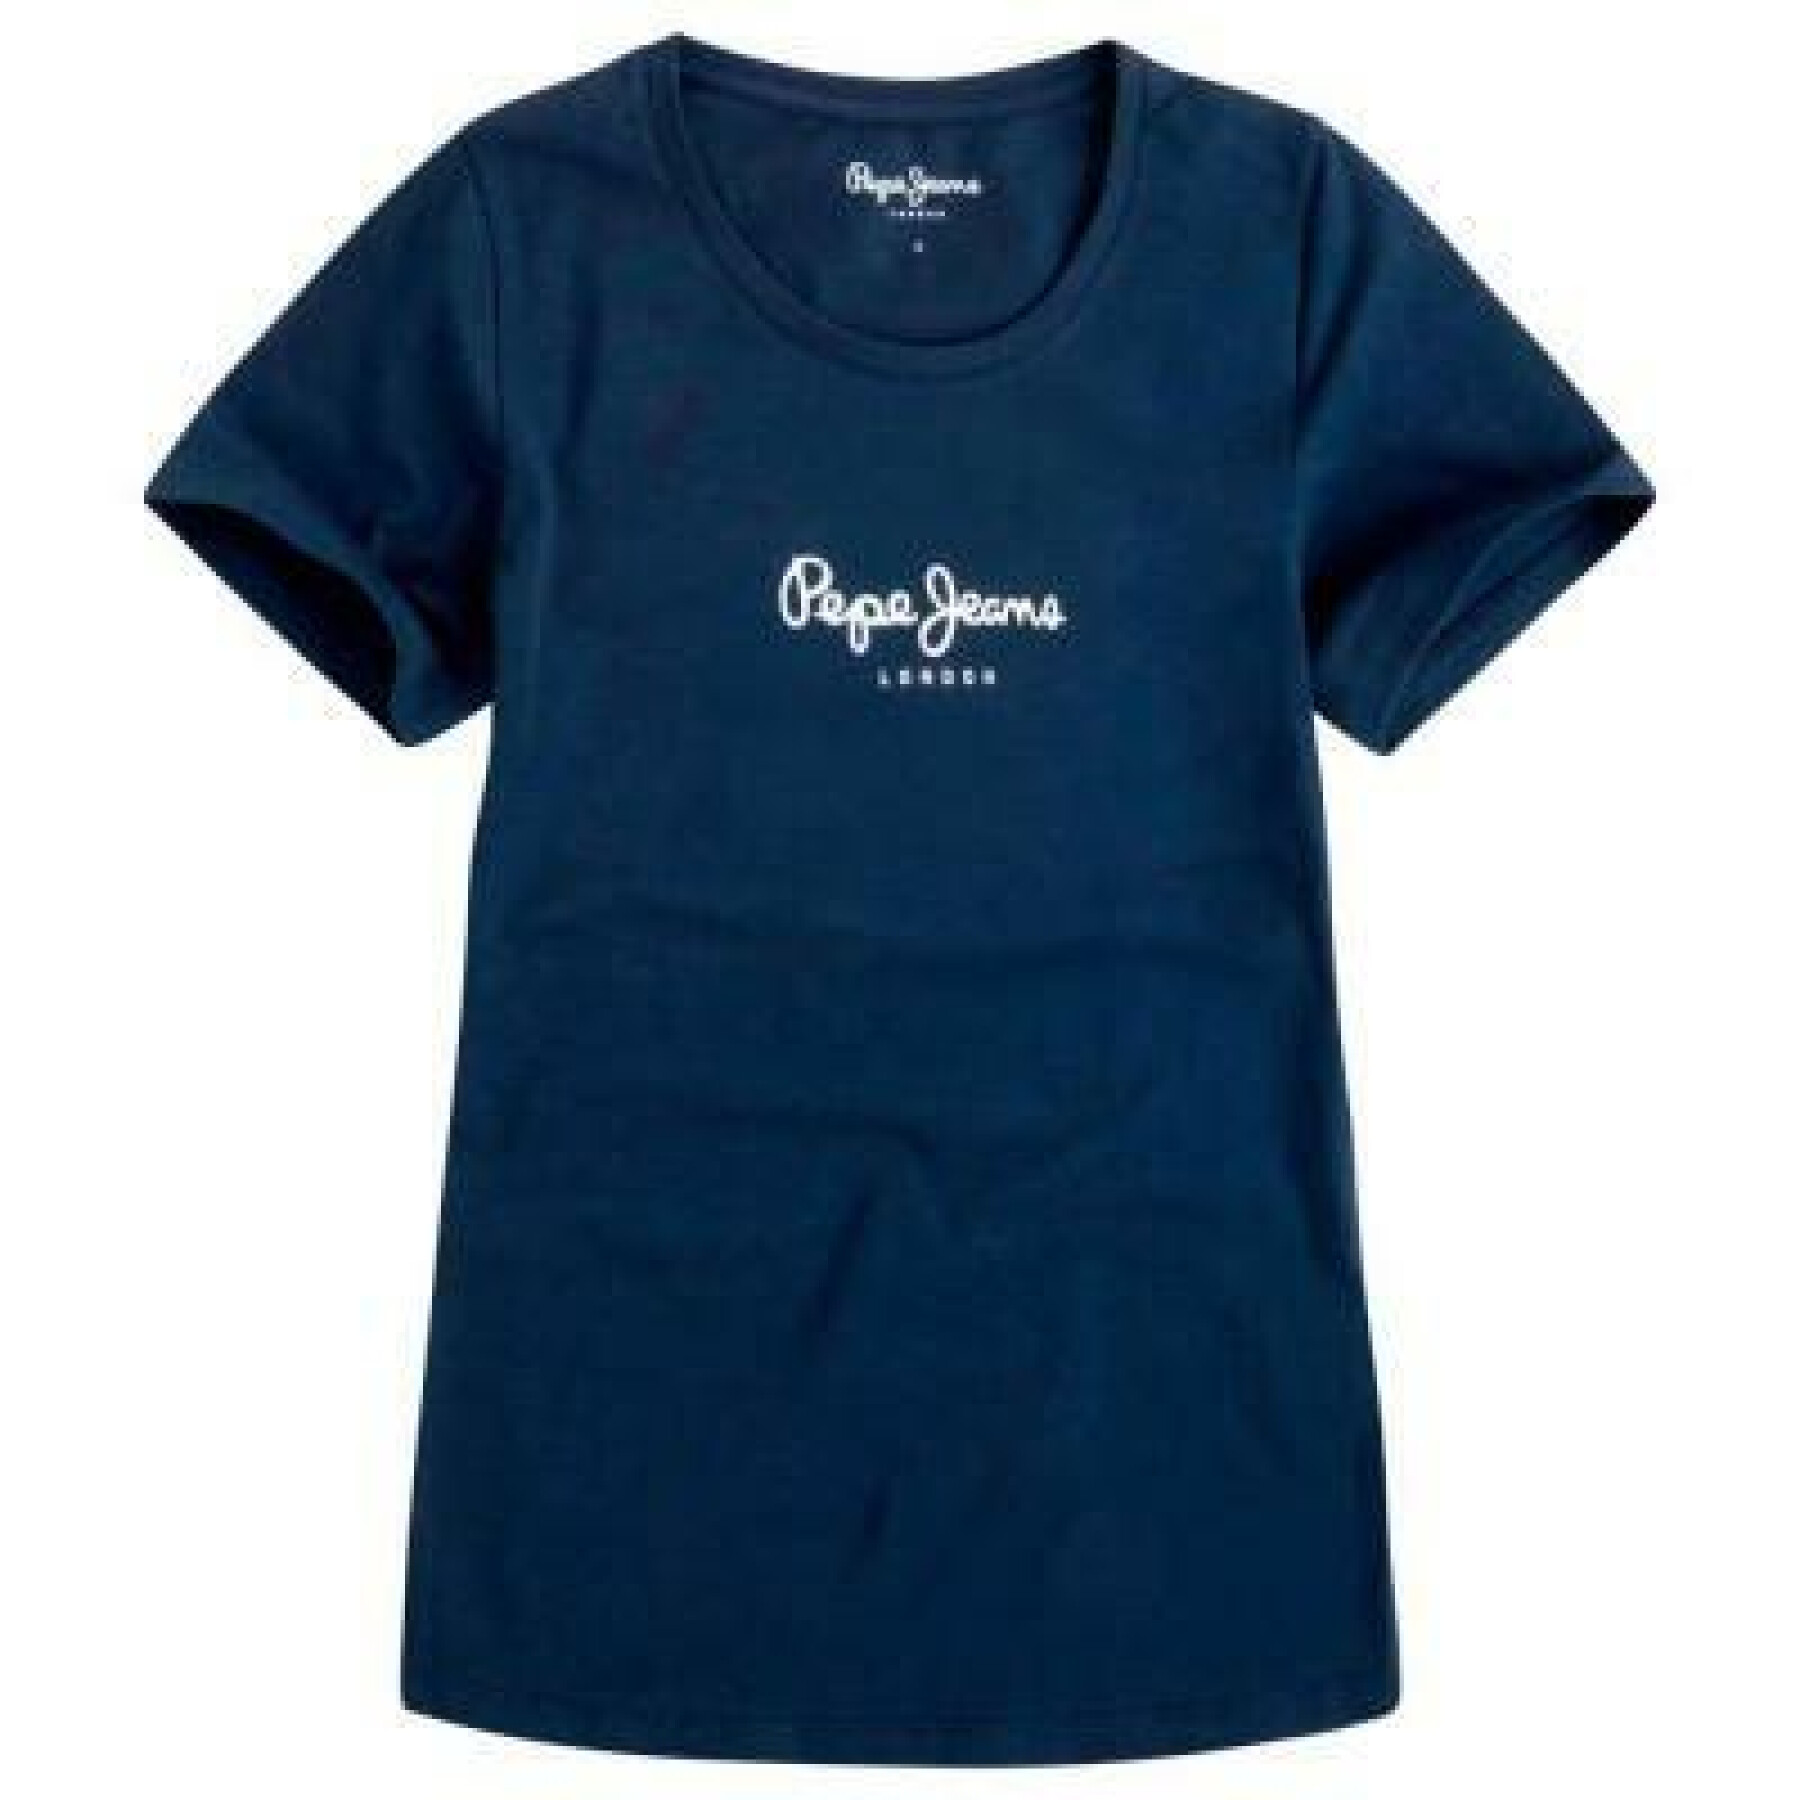 Camiseta mujer Pepe Jeans New Virginia